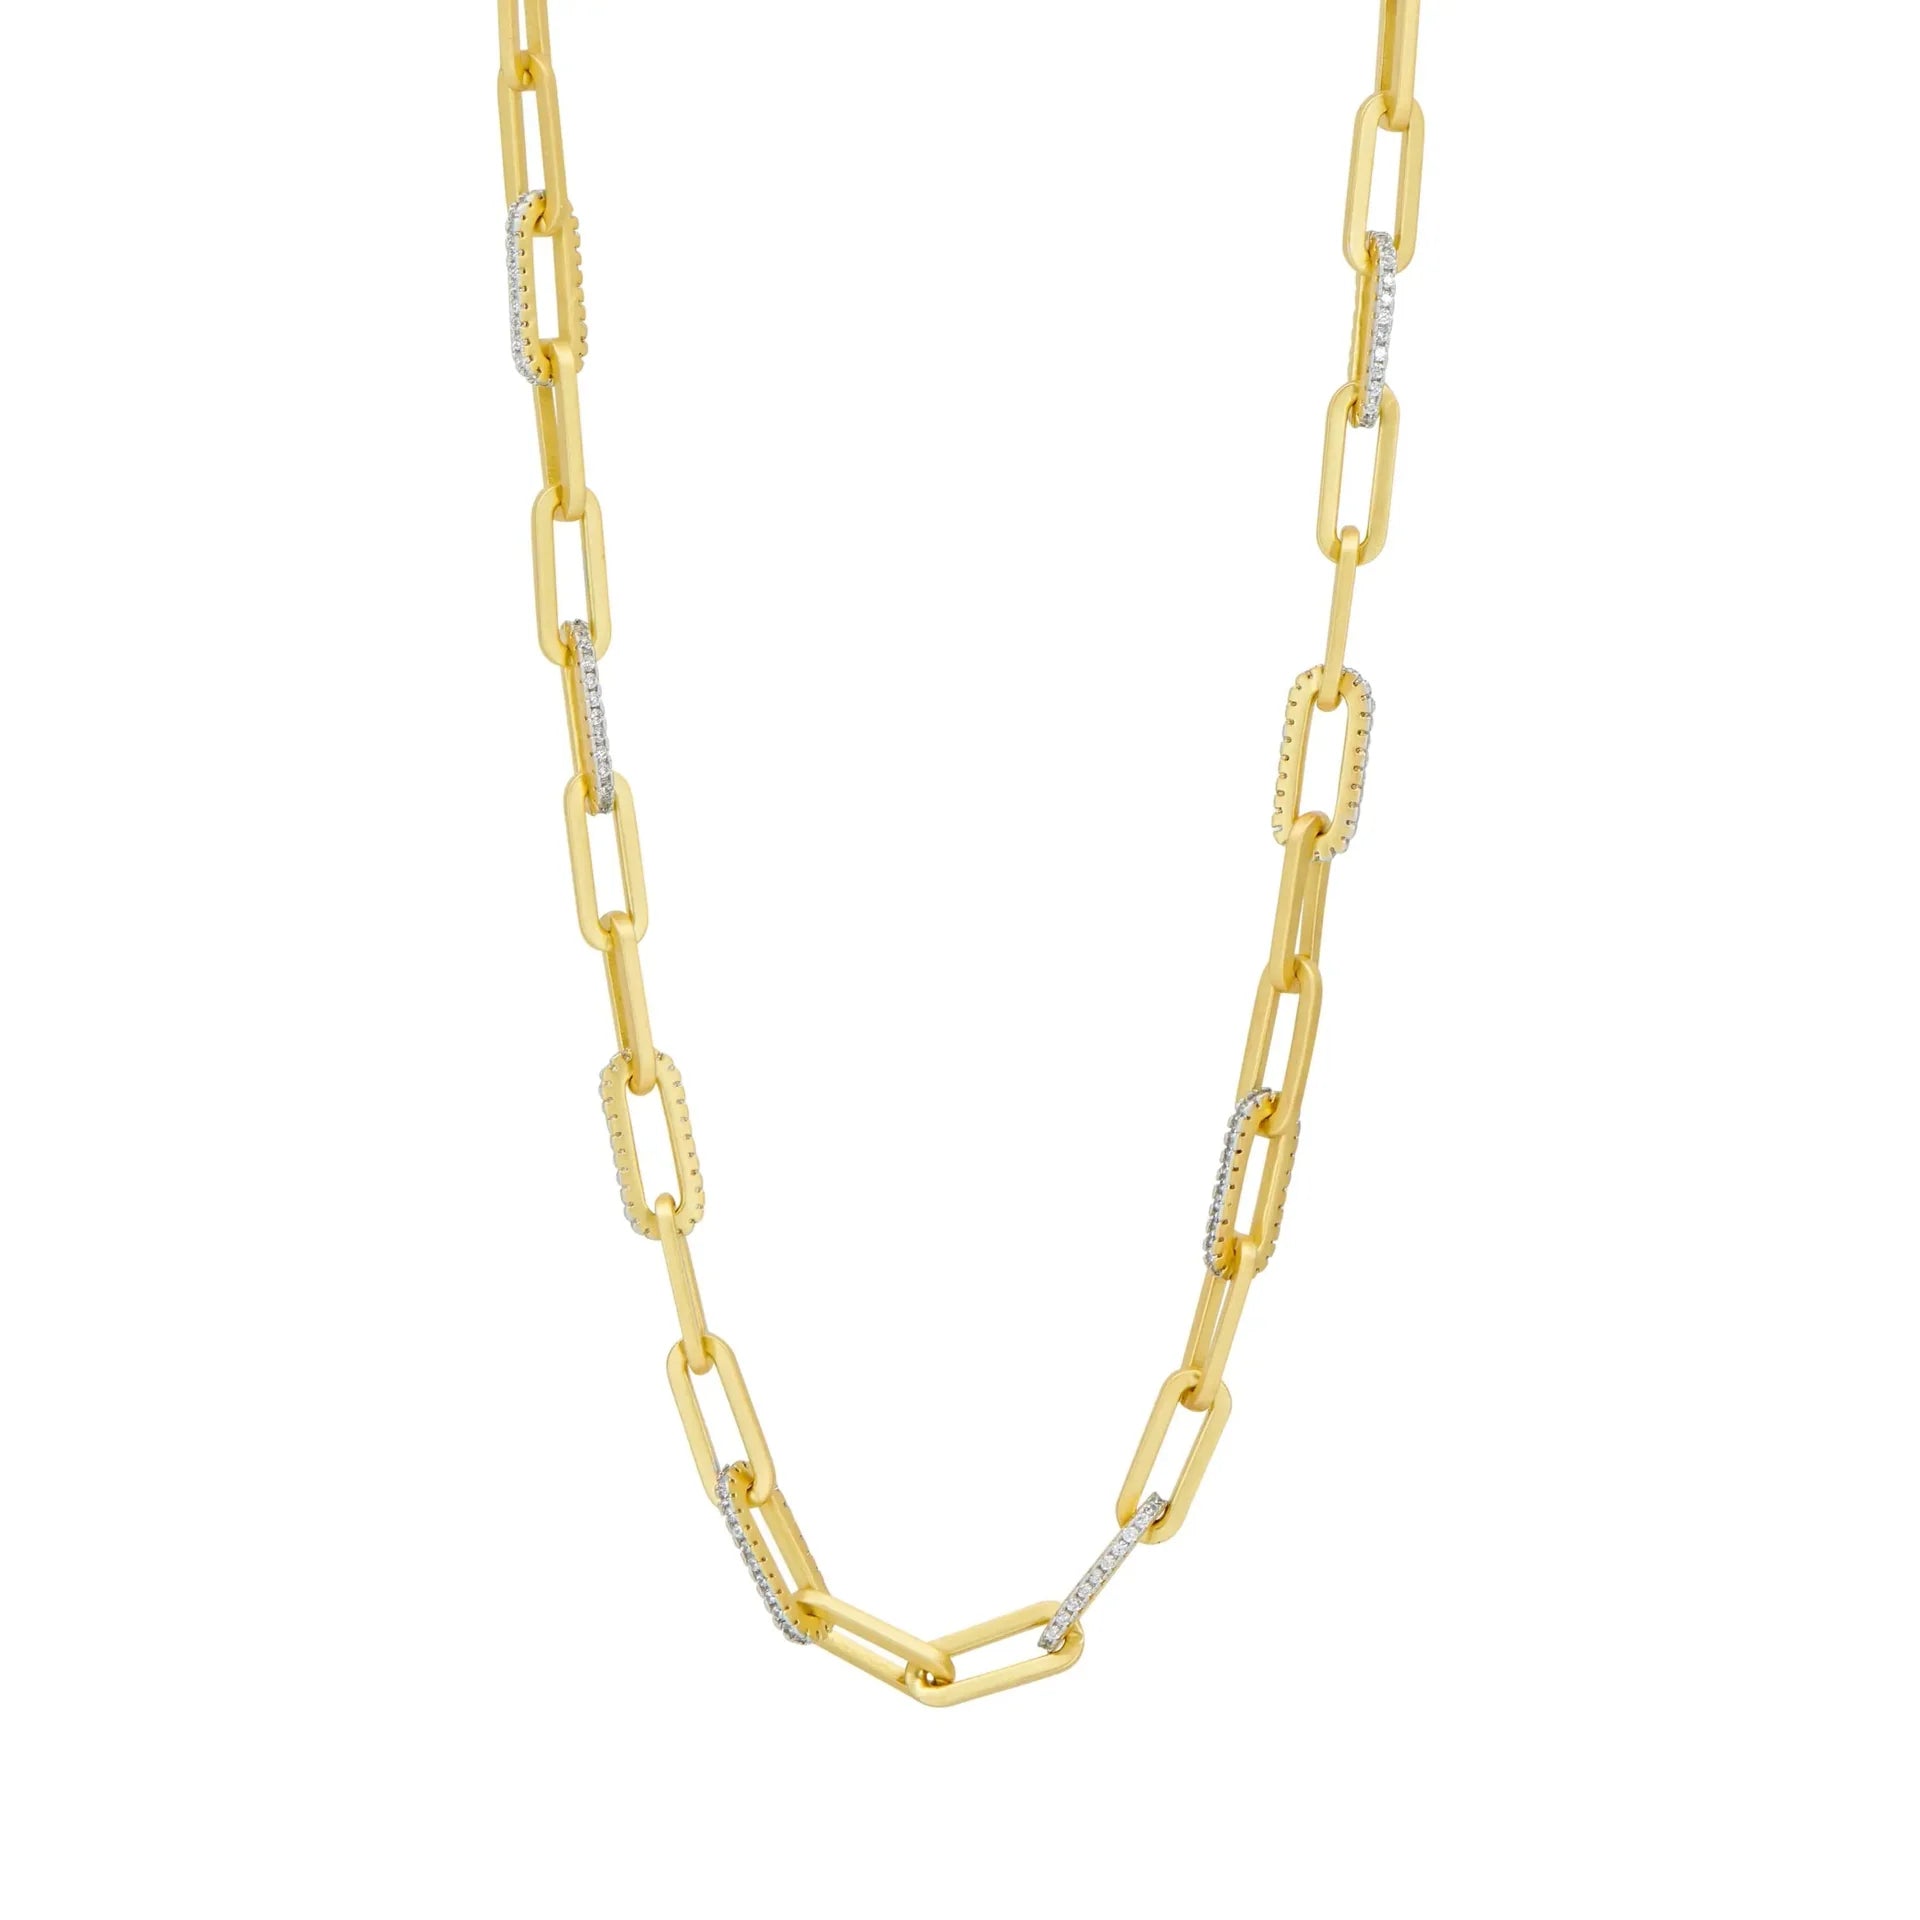 Coastal Chain Link Necklace: Brooklyn-Inspired Glistening Elegance